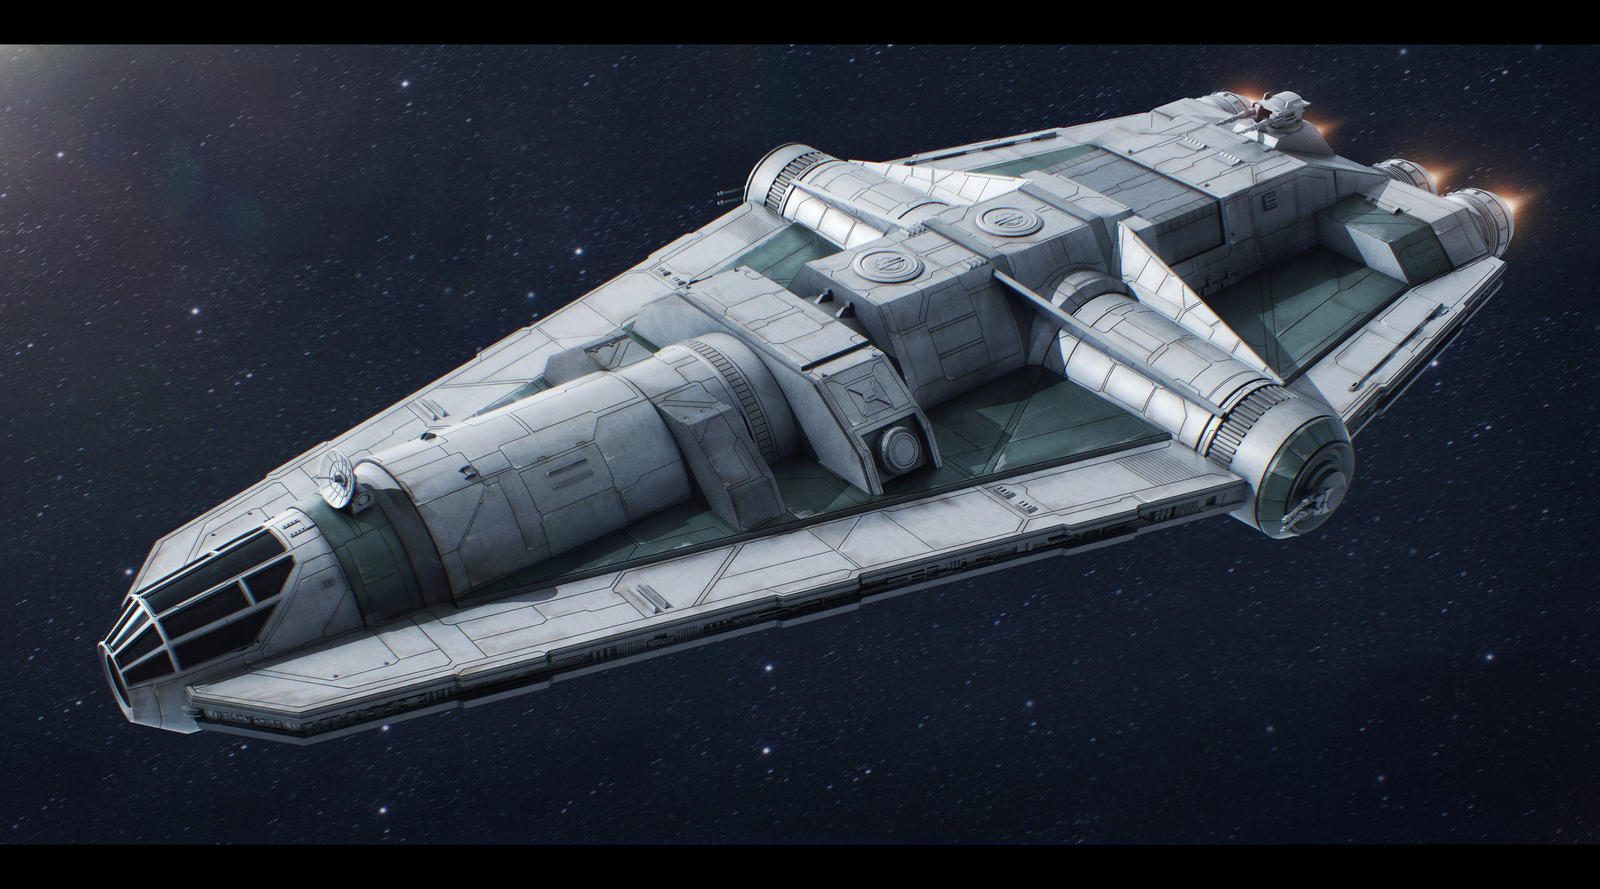 star_wars_barloz_class_medium_freighter_by_adamkop_ddhhd1v-fullview.jpg